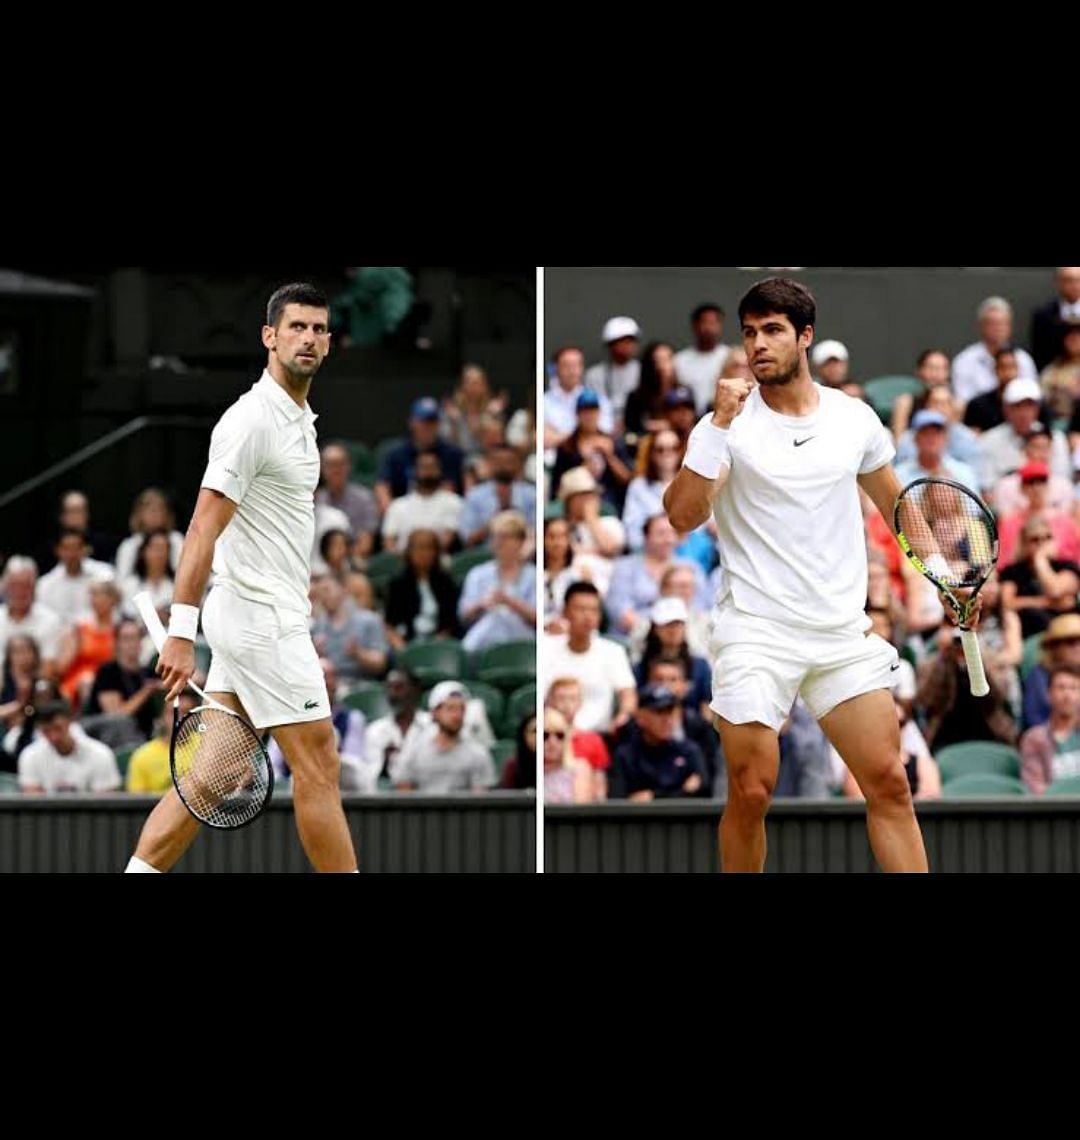 Djokovic and Alcaraz should be having an interesting battle in the Wimbledon final